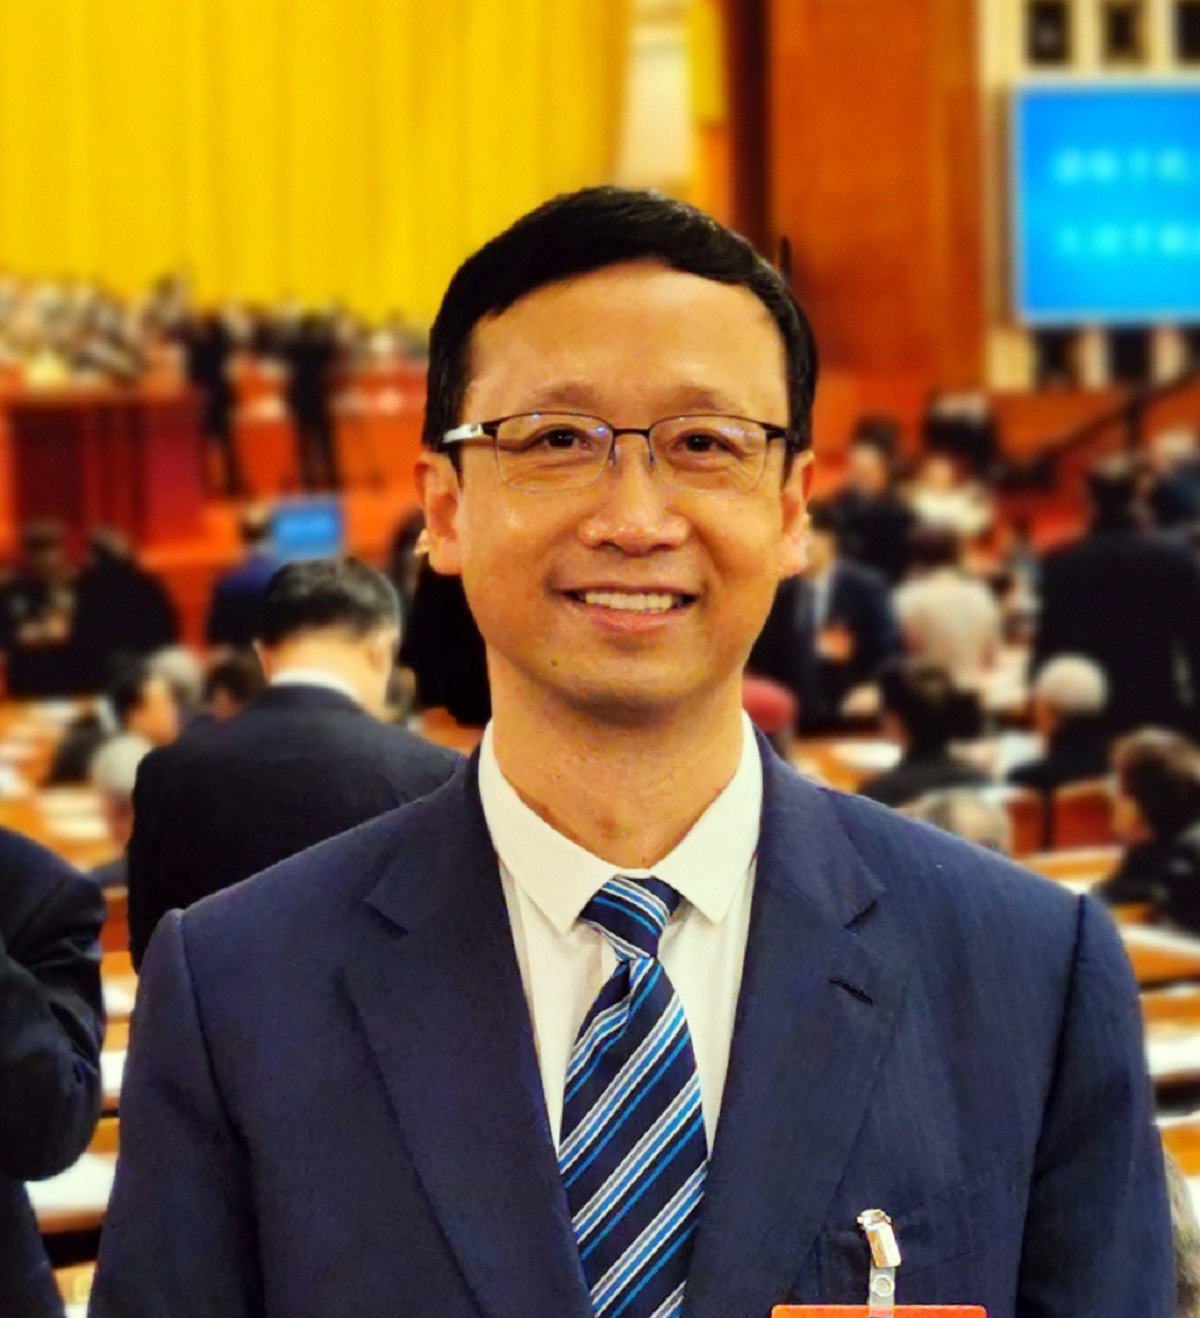 Liu Qi, Director of Chongqing Municipal Commission of Culture and Tourism Development,